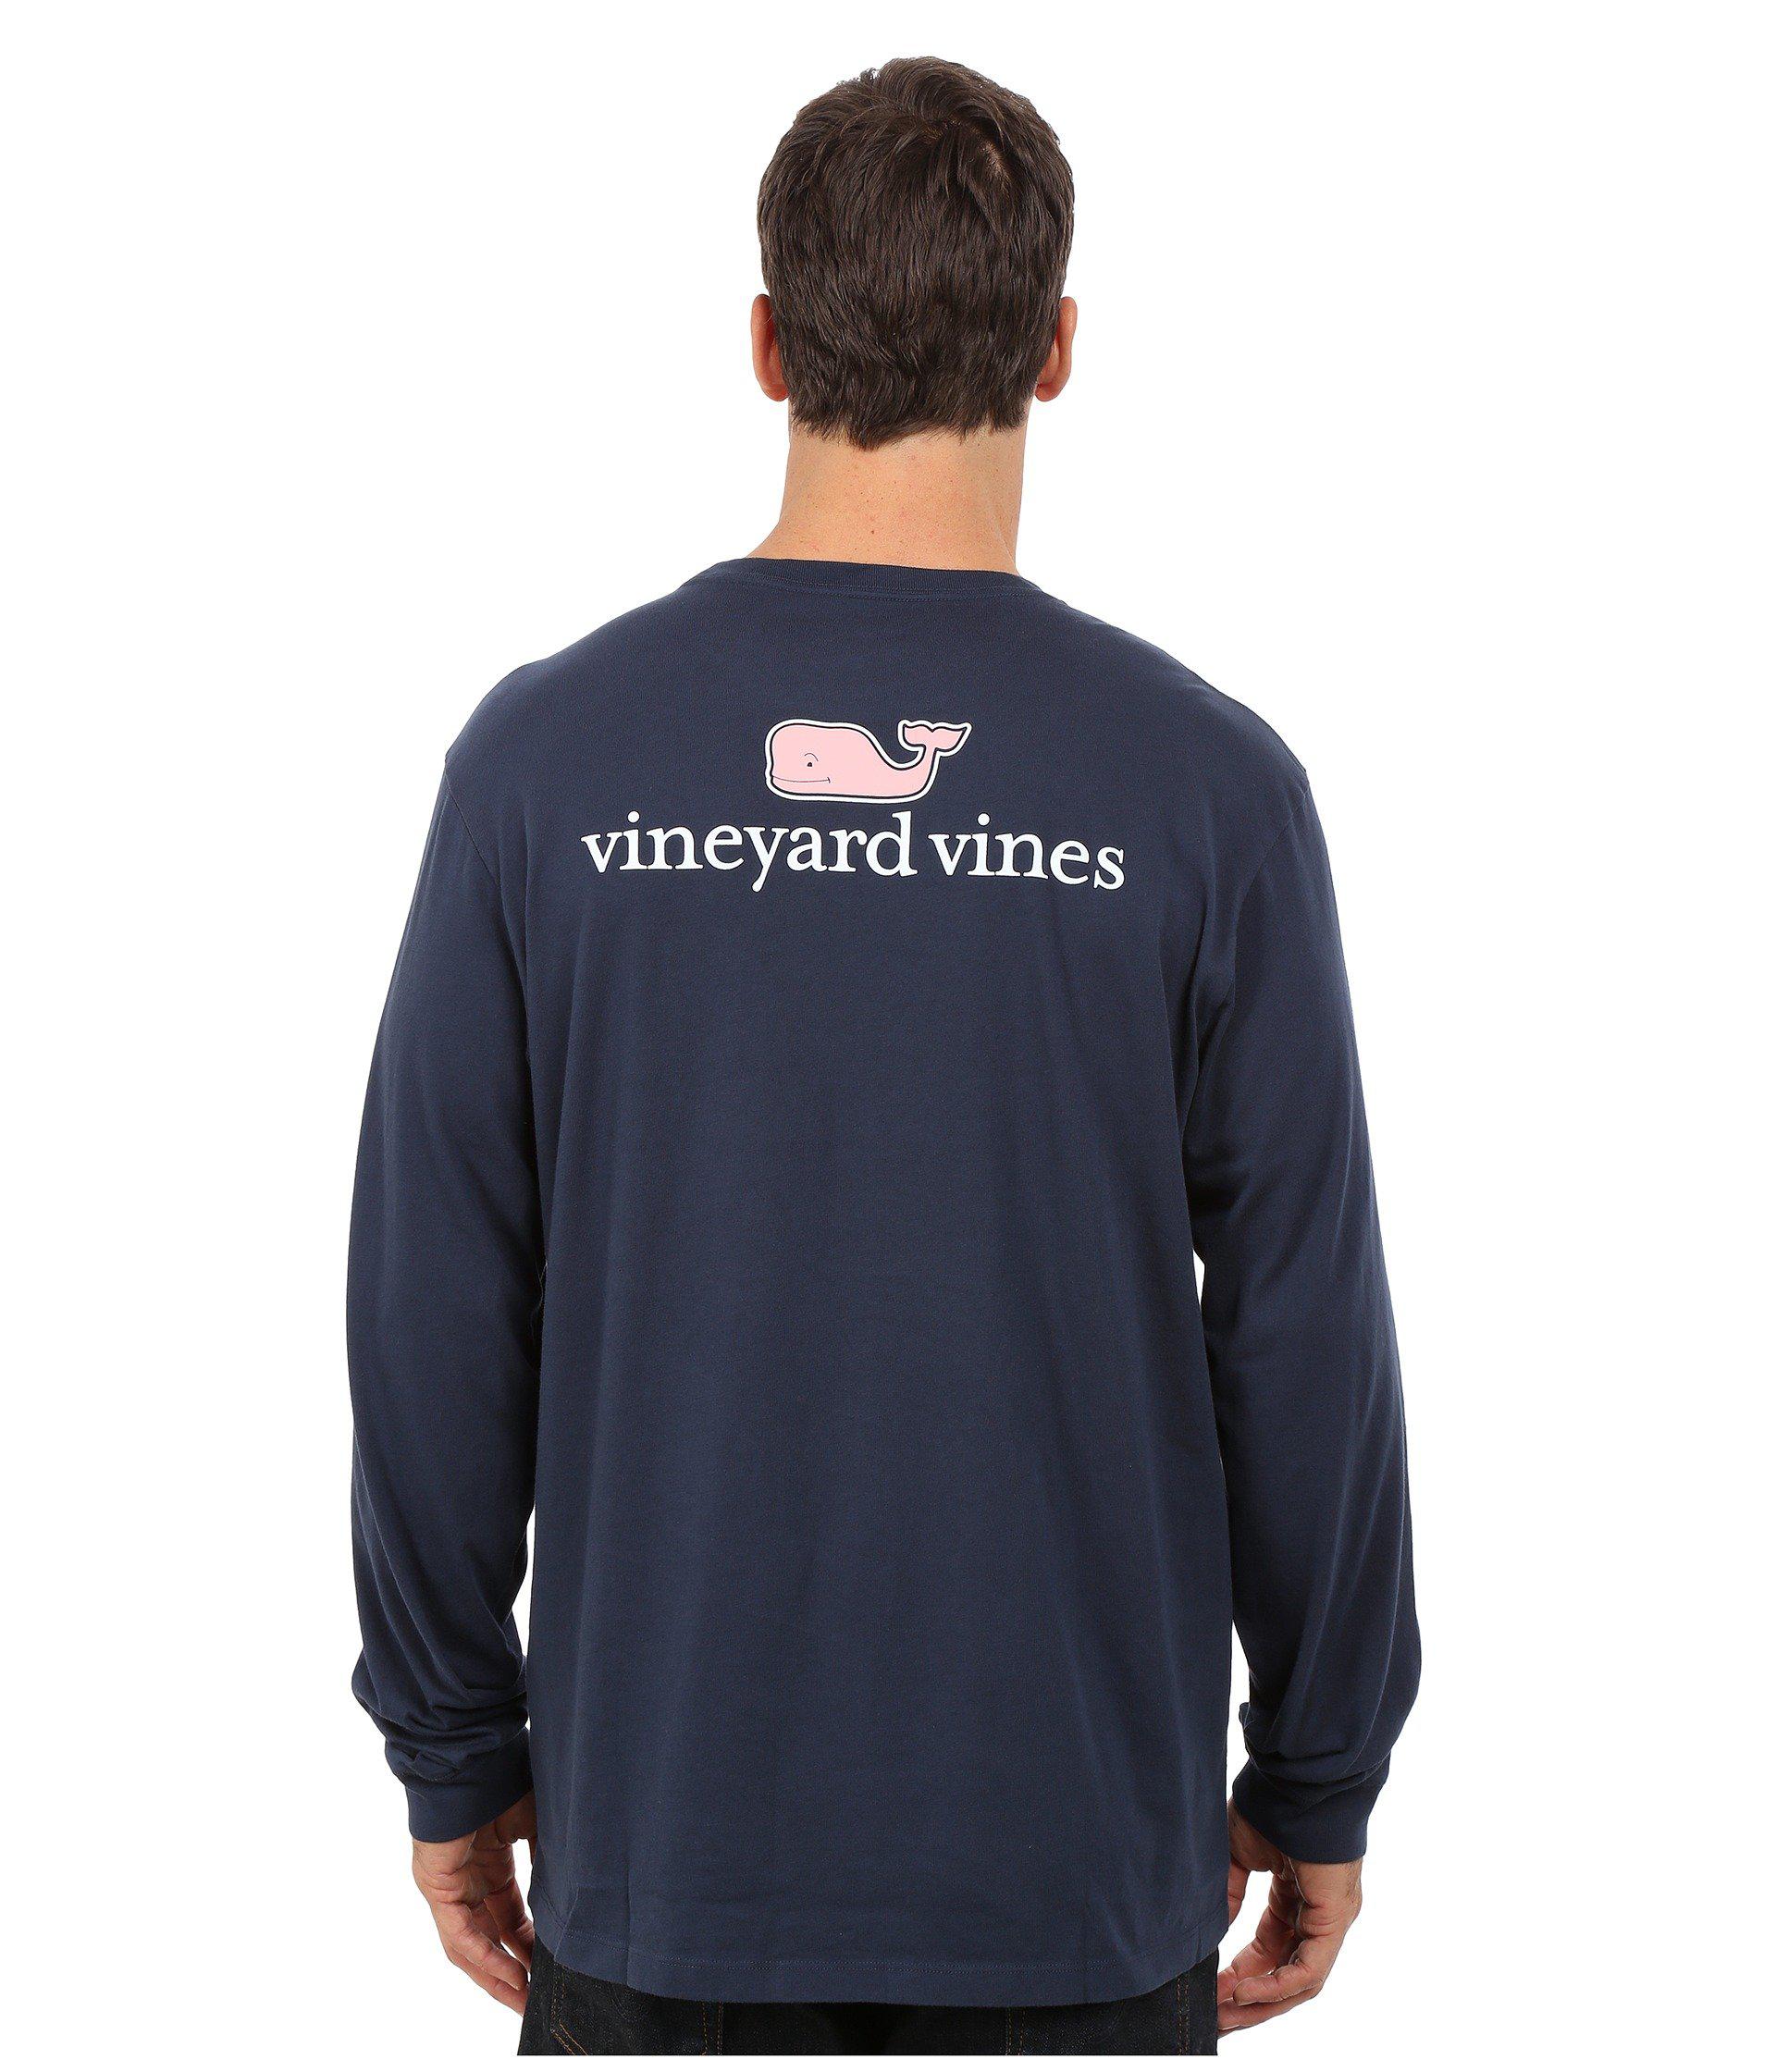 Lyst - Vineyard vines Long Sleeve Logo Graphic Pocket T-shirt in Blue ...